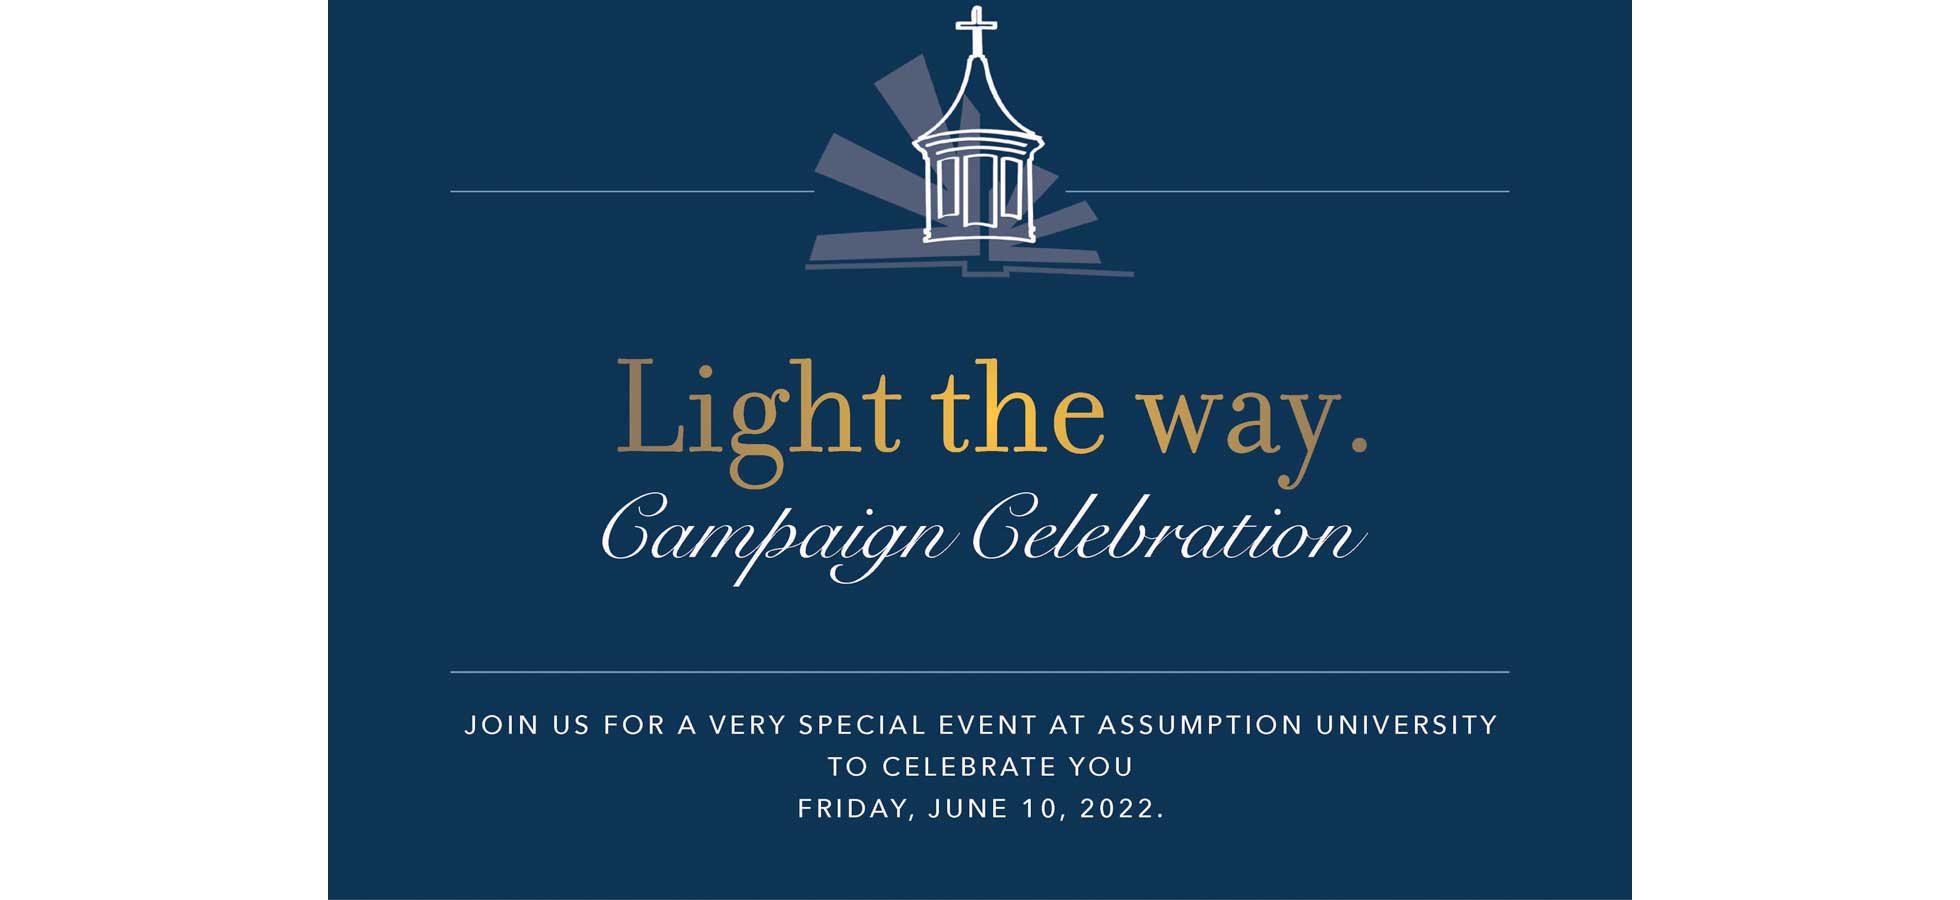 Light the Way Campaign gala invitation for Assumption University.